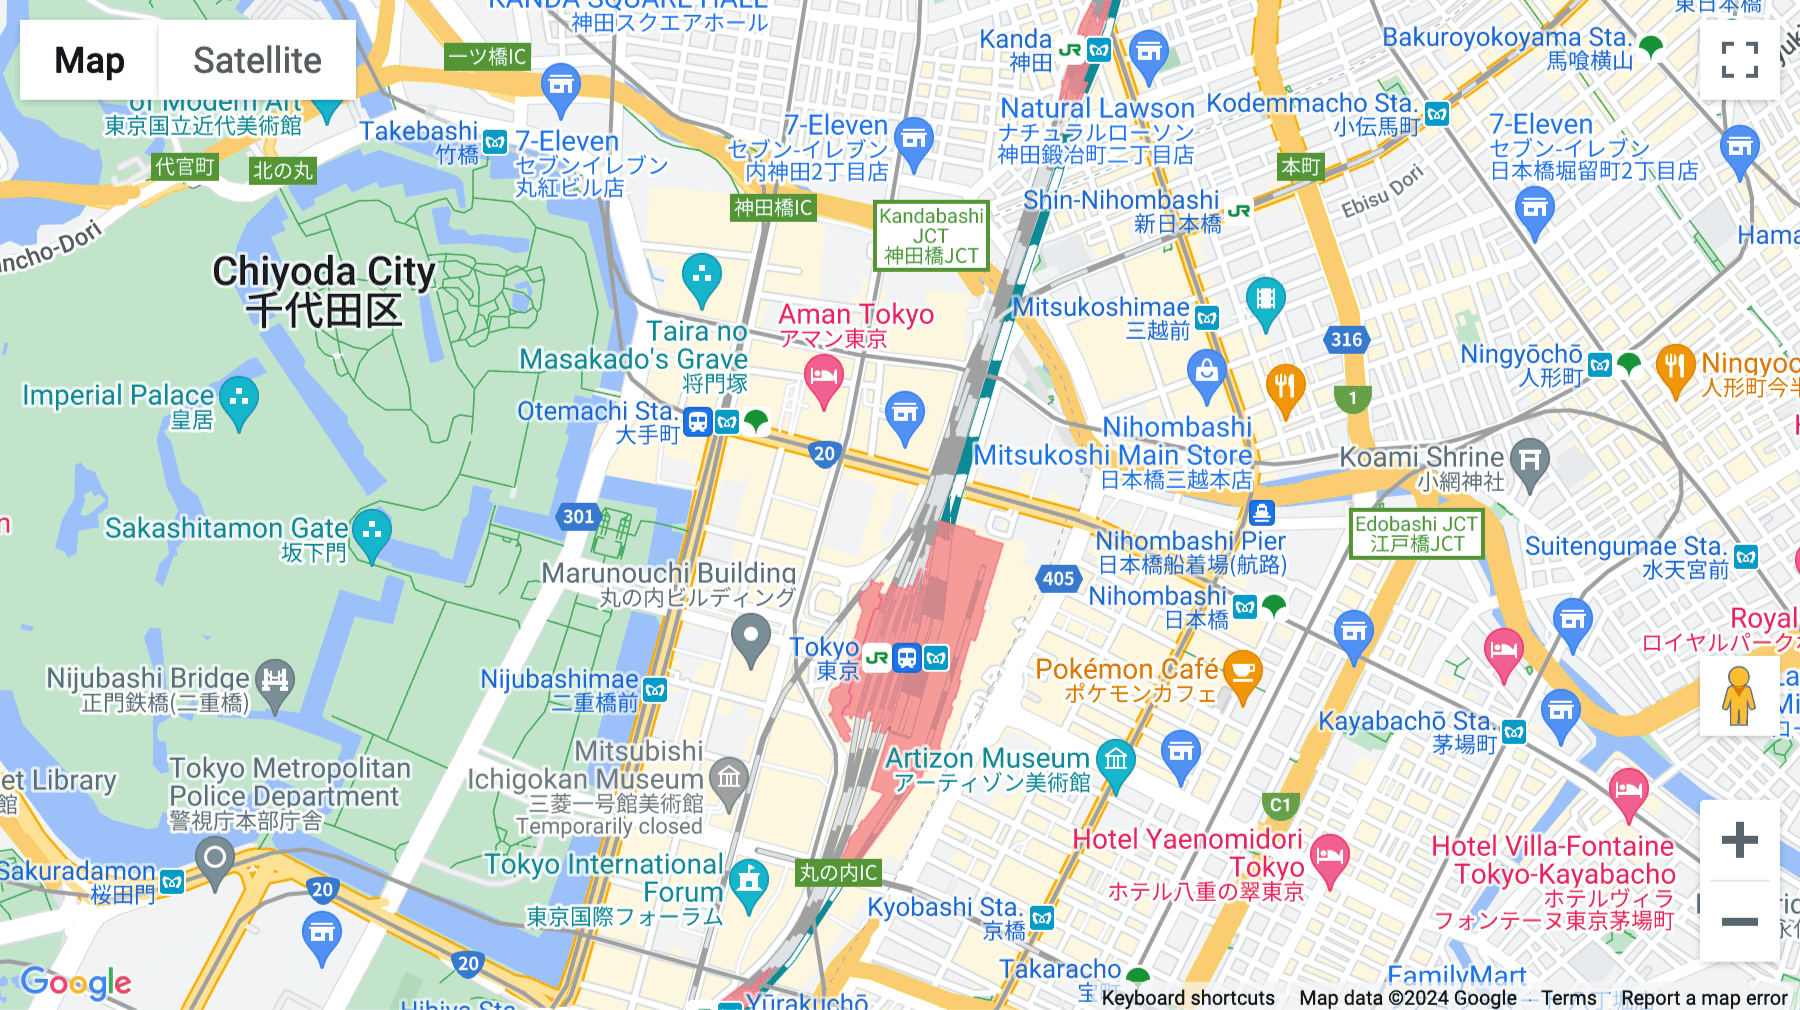 Click for interative map of Marunouchi Kitaguchi Building 9F, 1-6-5 Marunouchi, Tokyo